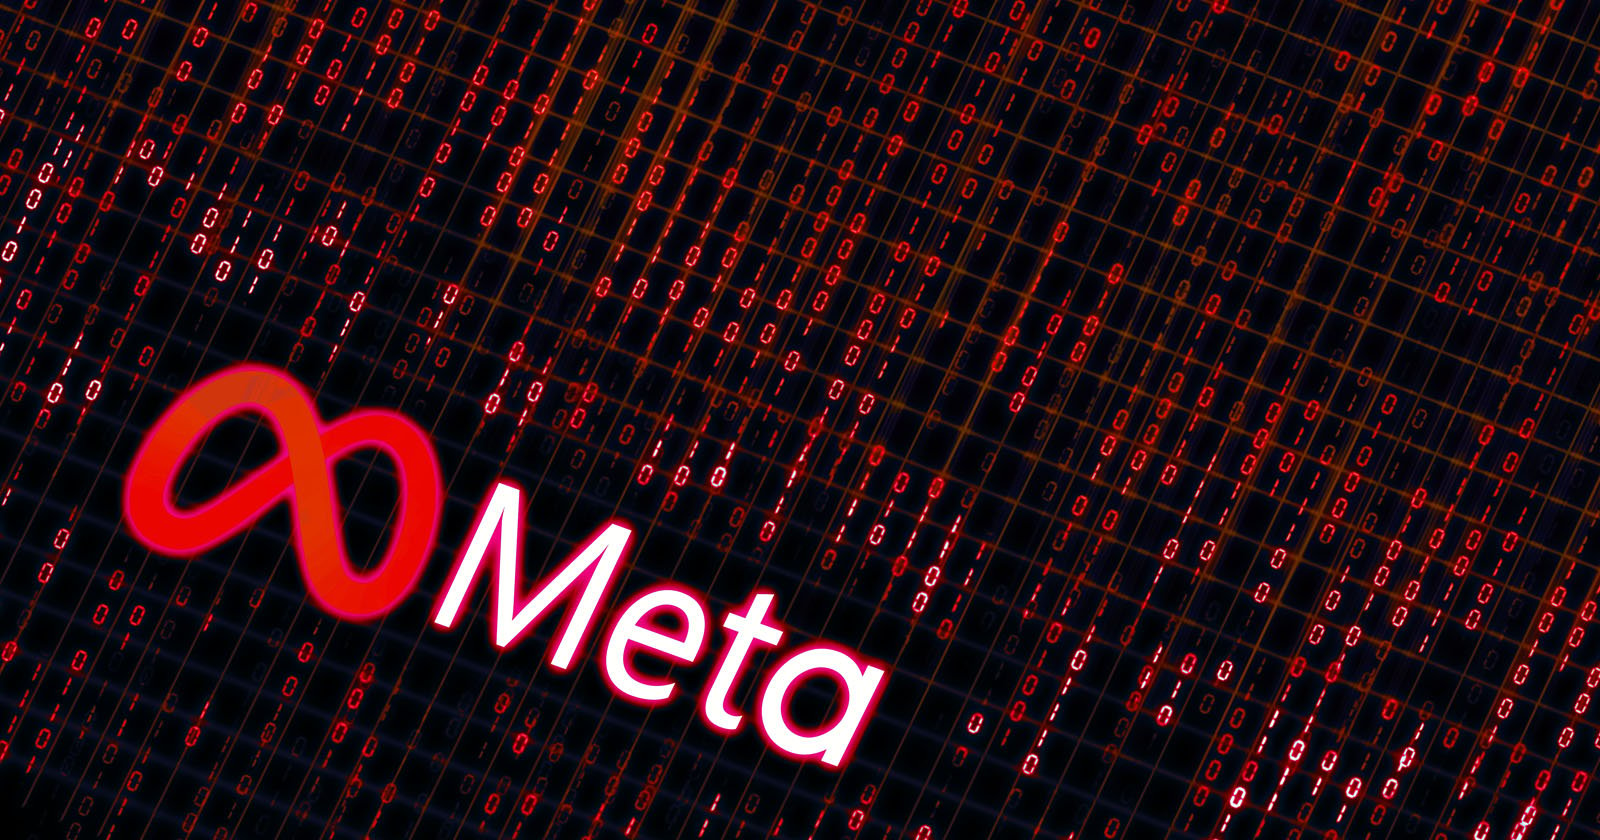  meta trusted partner program failing miserably report 